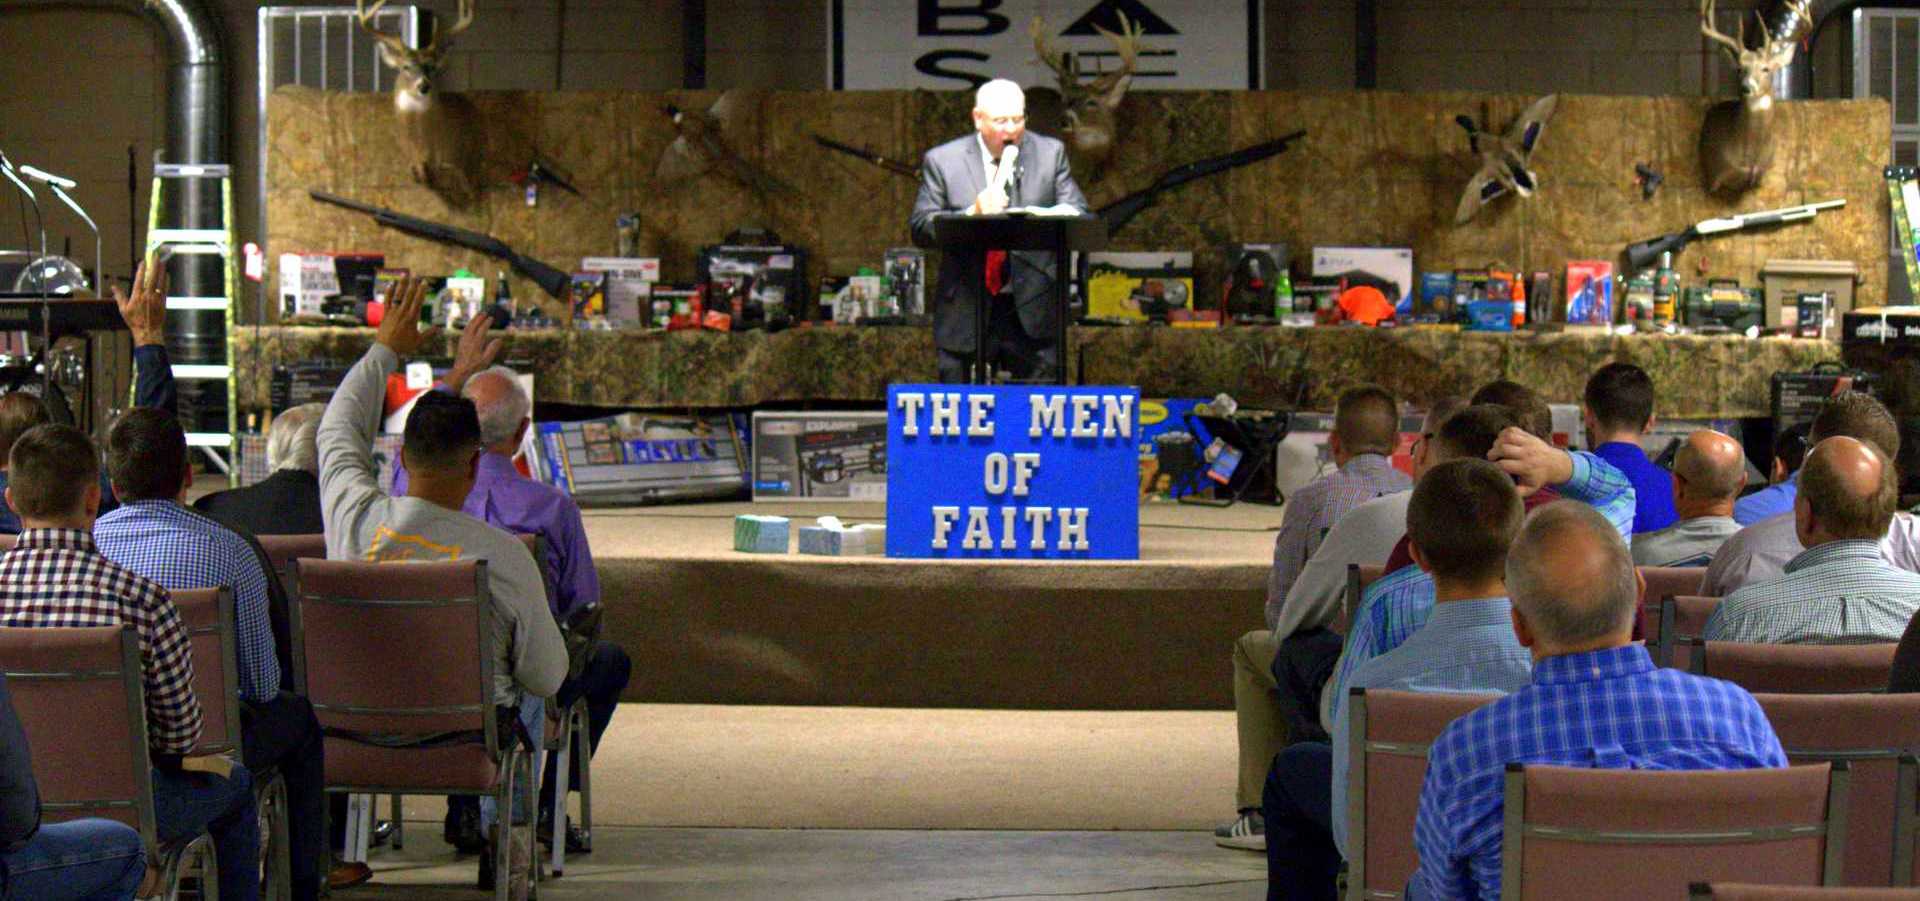 Men-of-faith-001